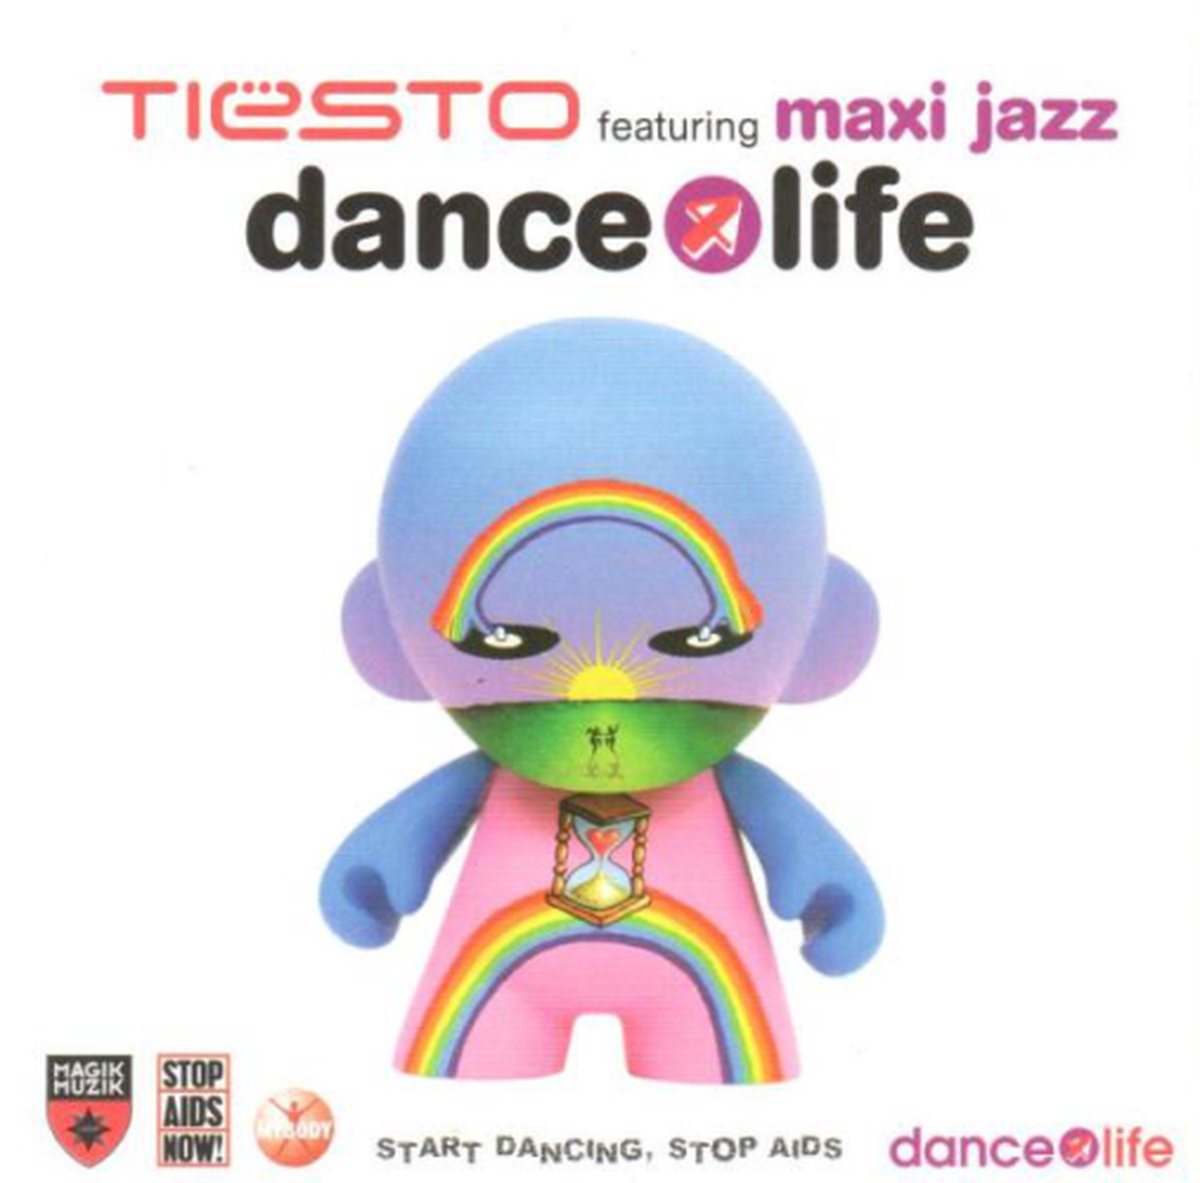 Dance4life - Tiësto Featuring Maxi Jazz